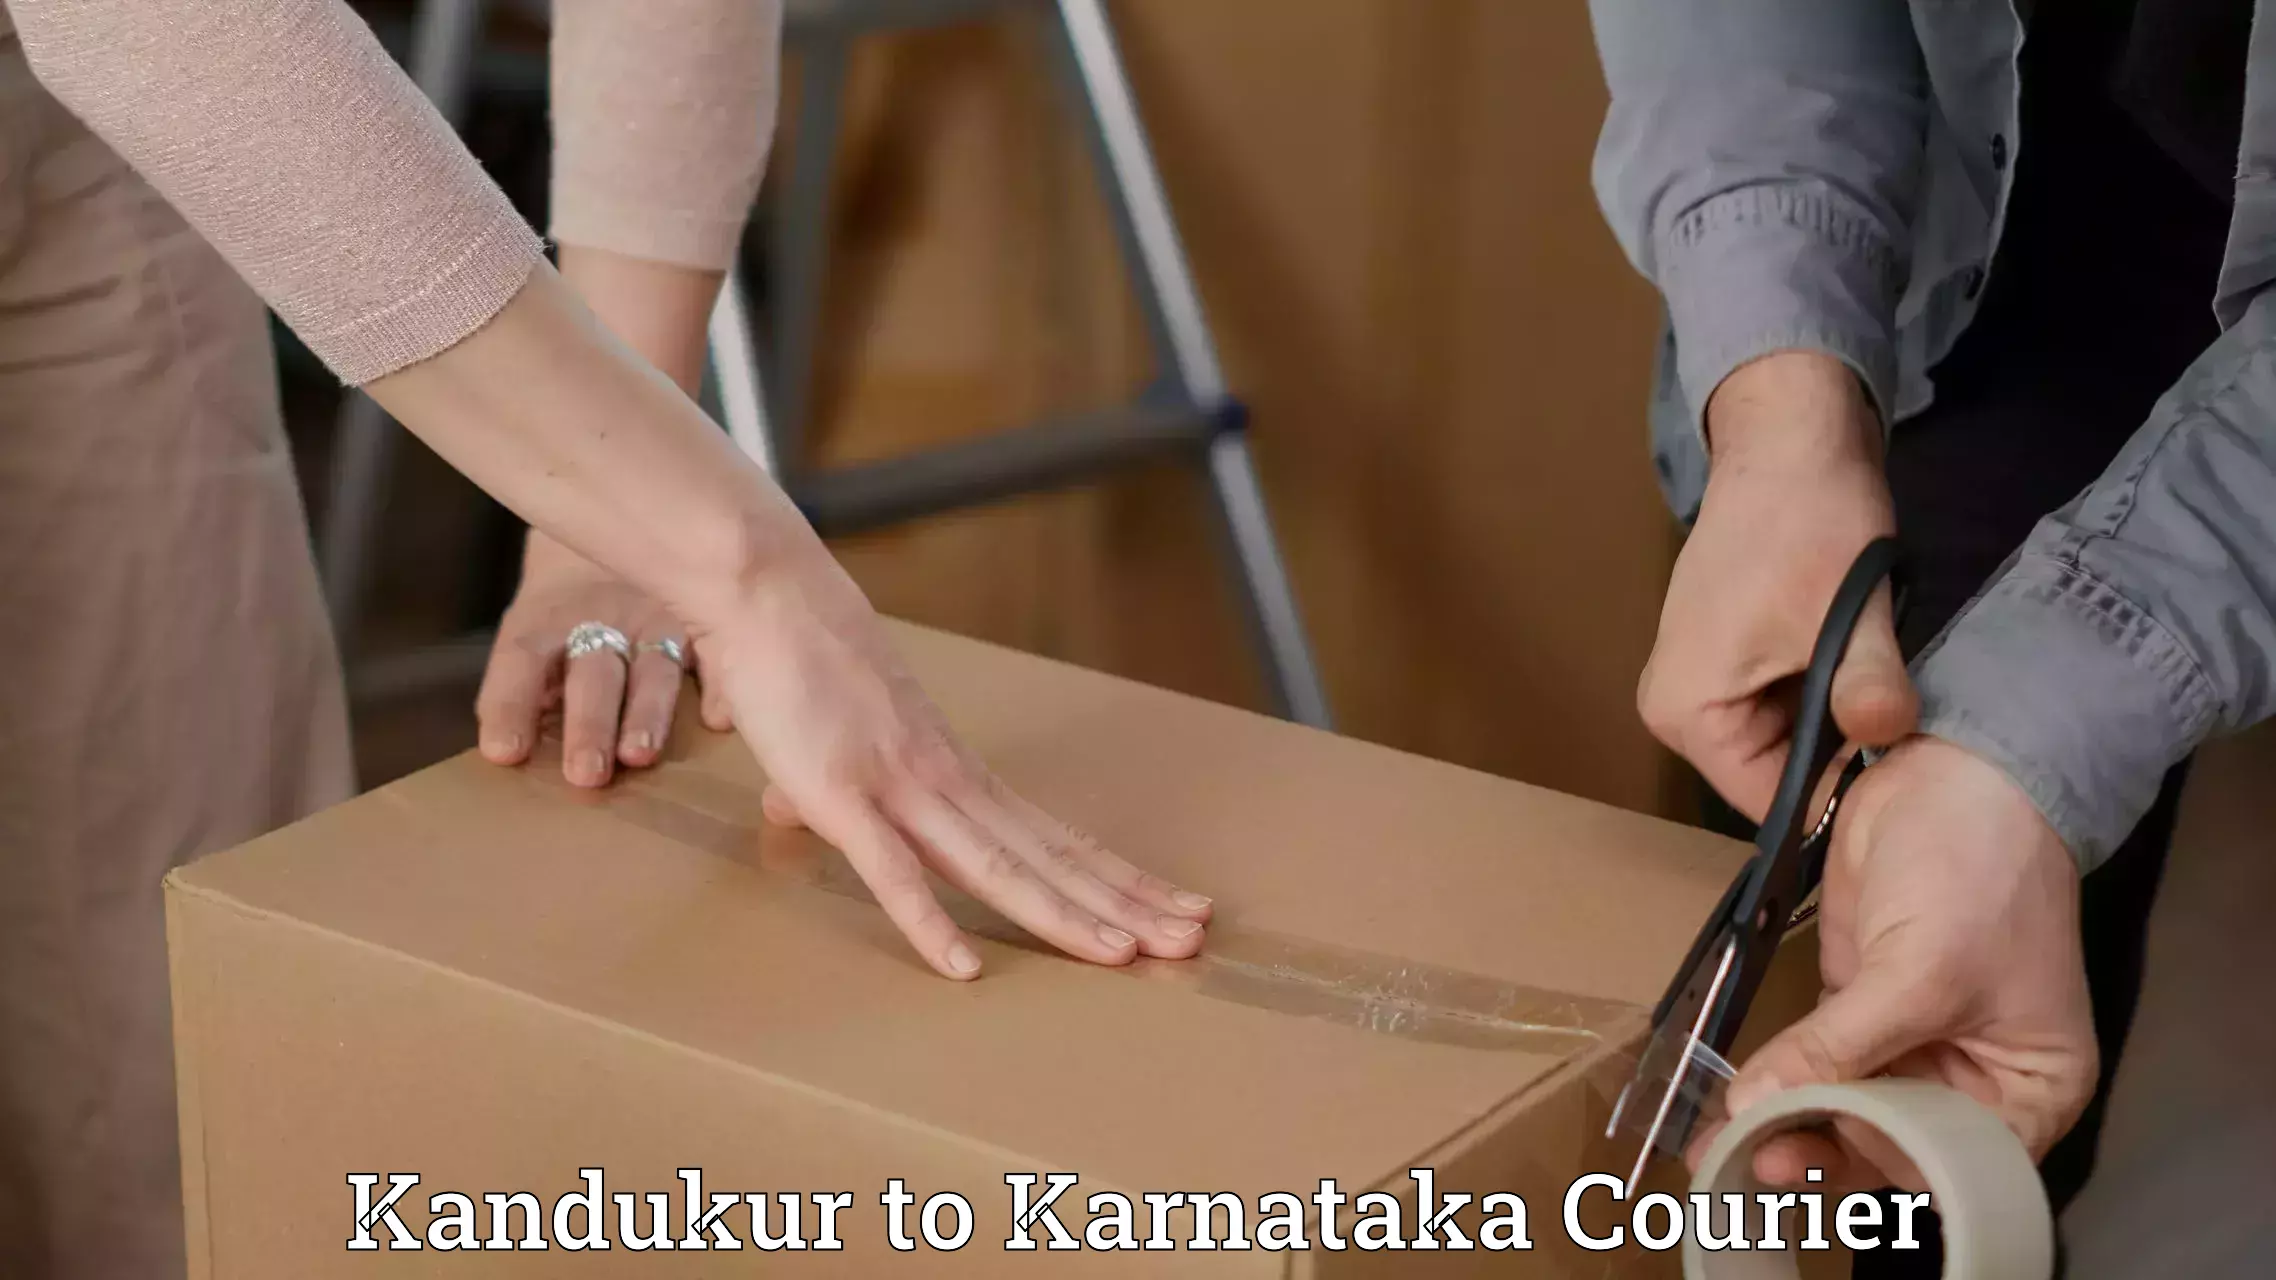 Easy access courier services Kandukur to Uttara Kannada